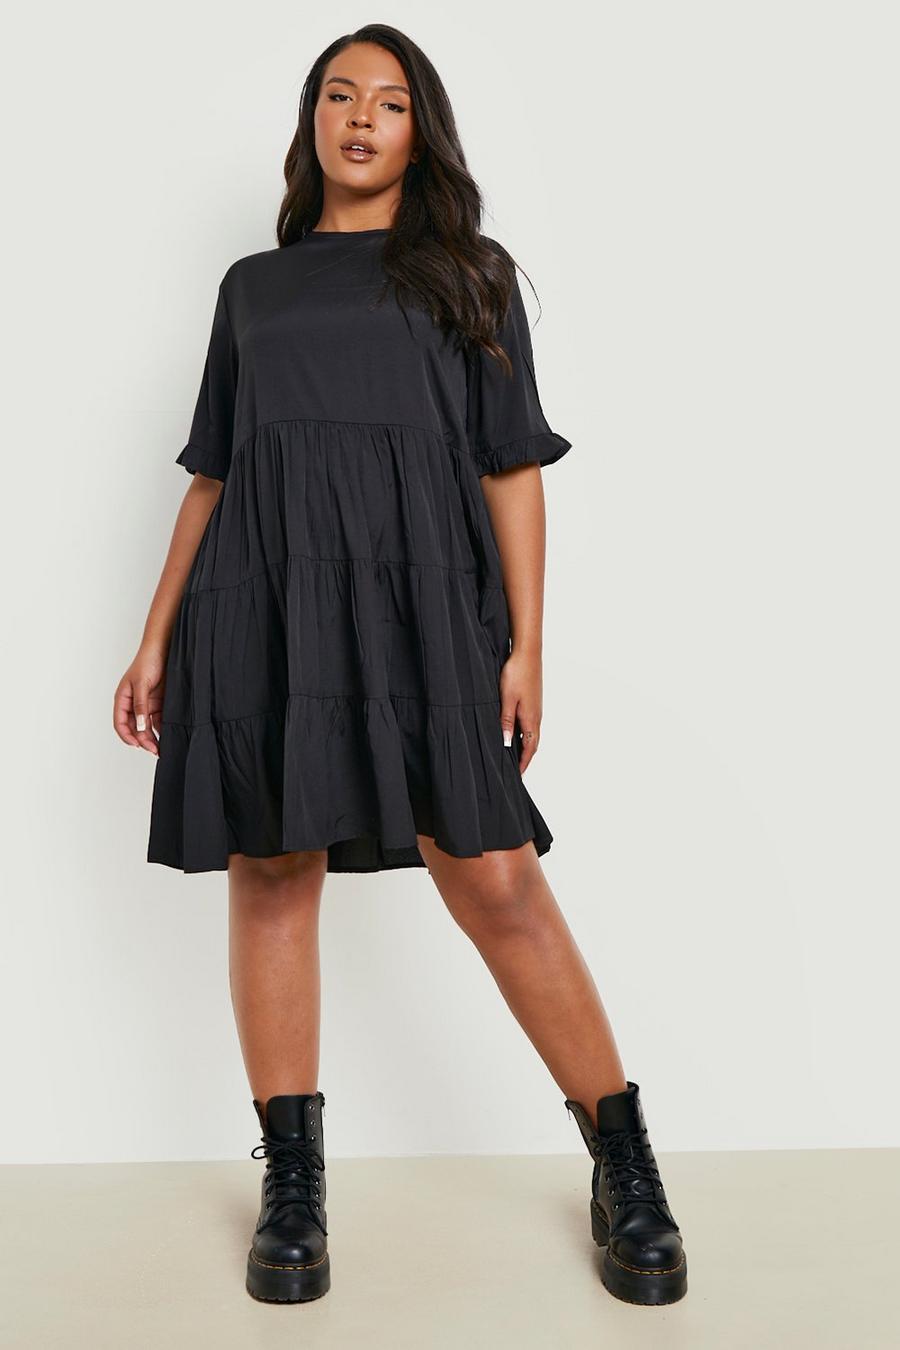 Black Plus Size Dresses